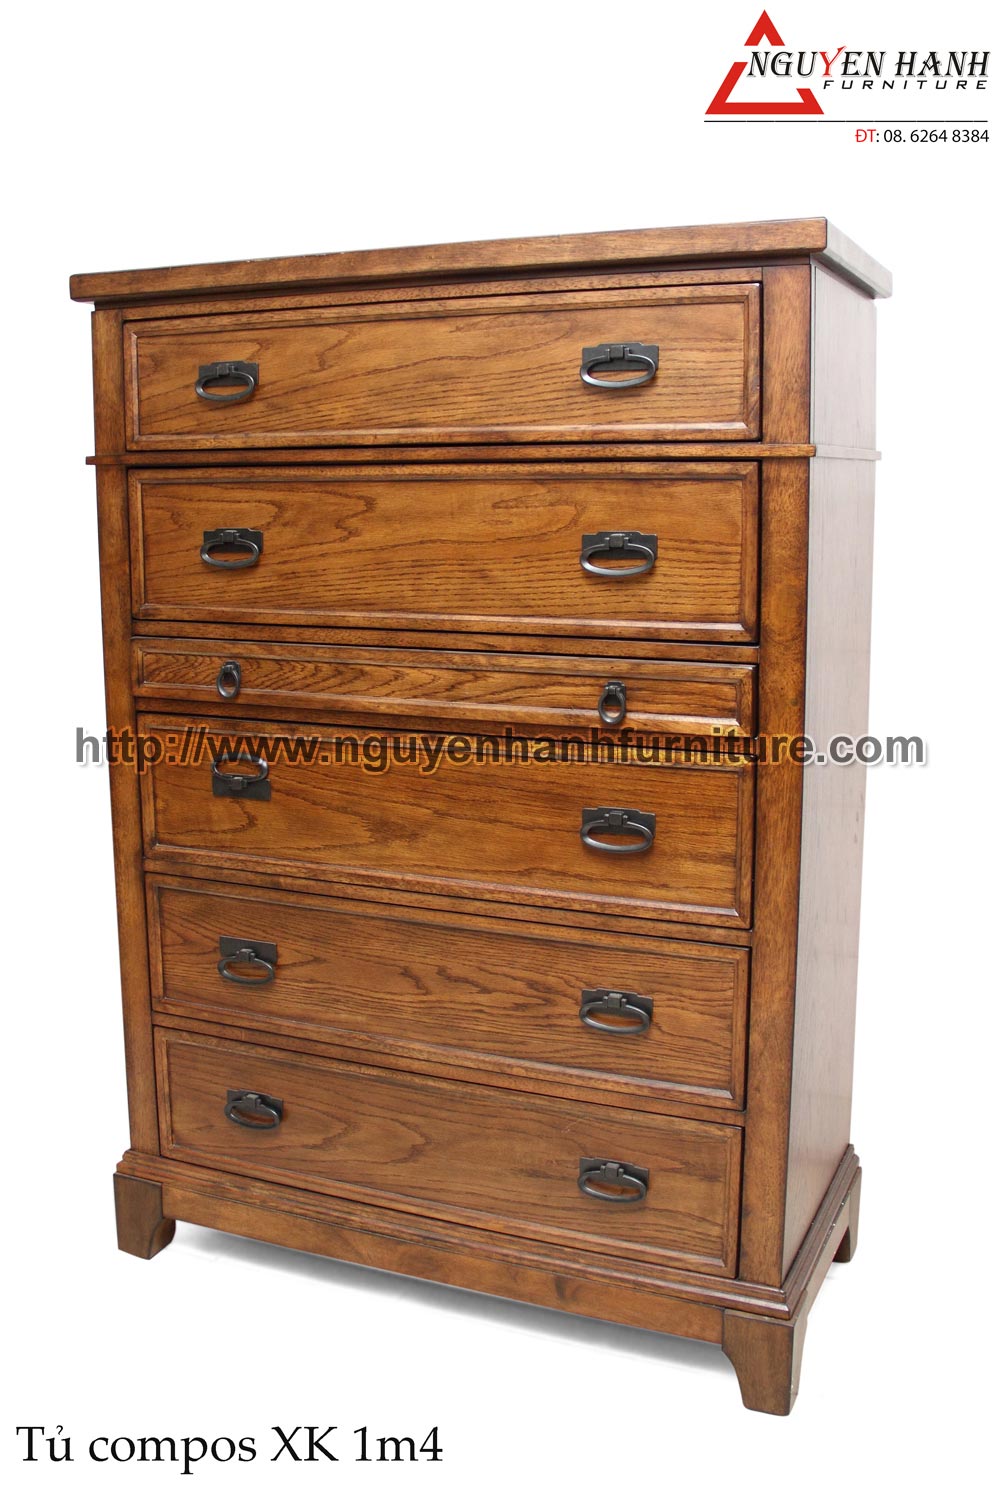 Name product: 1m4 Export-standard compos Drawers Cabinet- Dimensions: 46 x 100 x 140cm - Description: Oak wood, Rubber wood